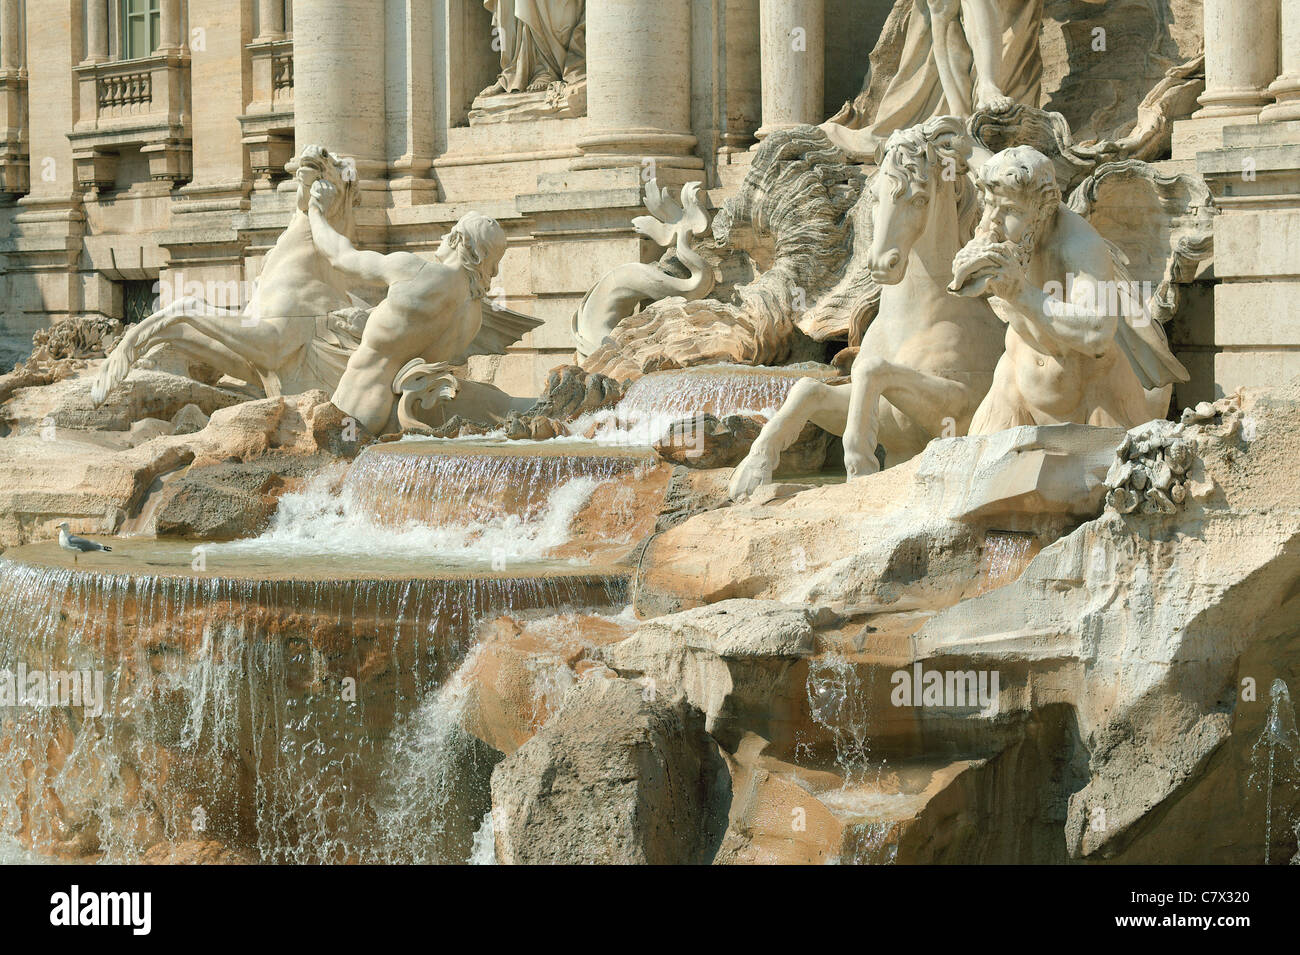 Sculptures de la fontaine de Trevi Fontana di Trevi Rome, Italie Banque D'Images